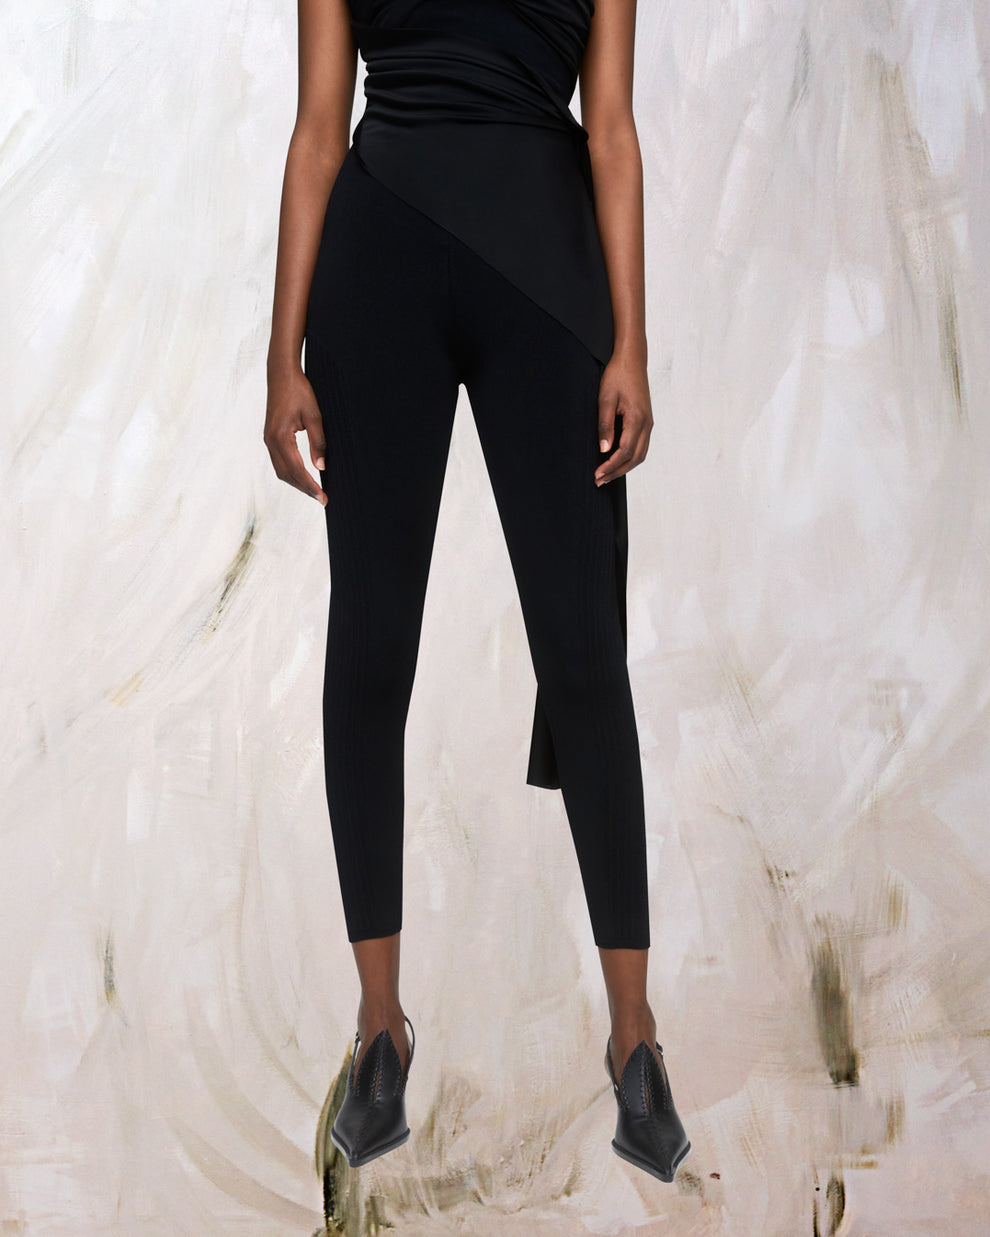 – SCULPT - Fashion AZ BLACK LEGGING - High-End Factory Designer